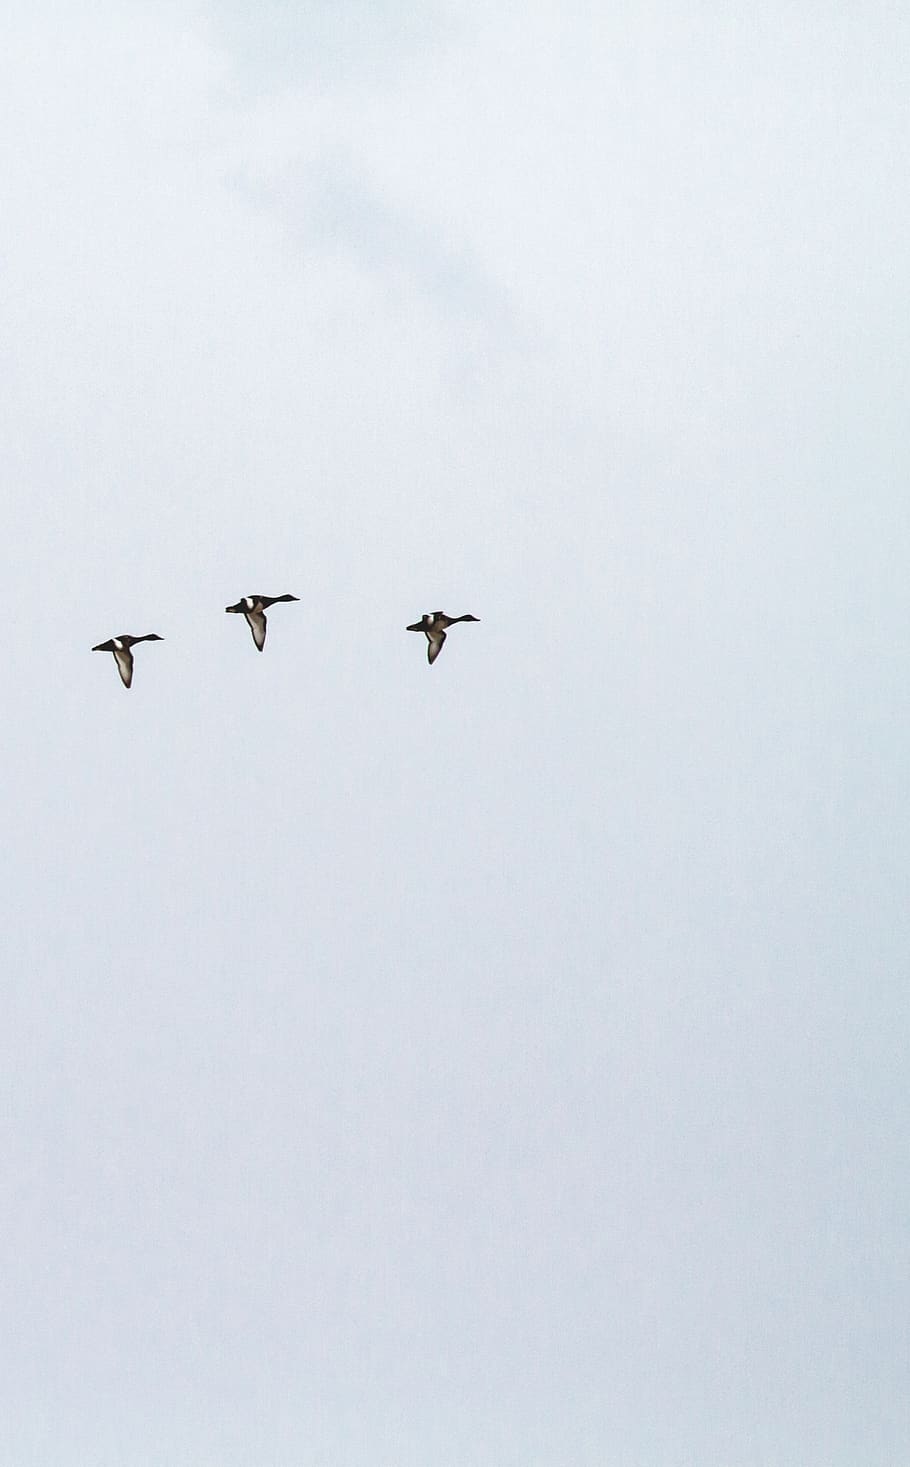 three ducks flying under the clouds during daytime, animal, ardeidae